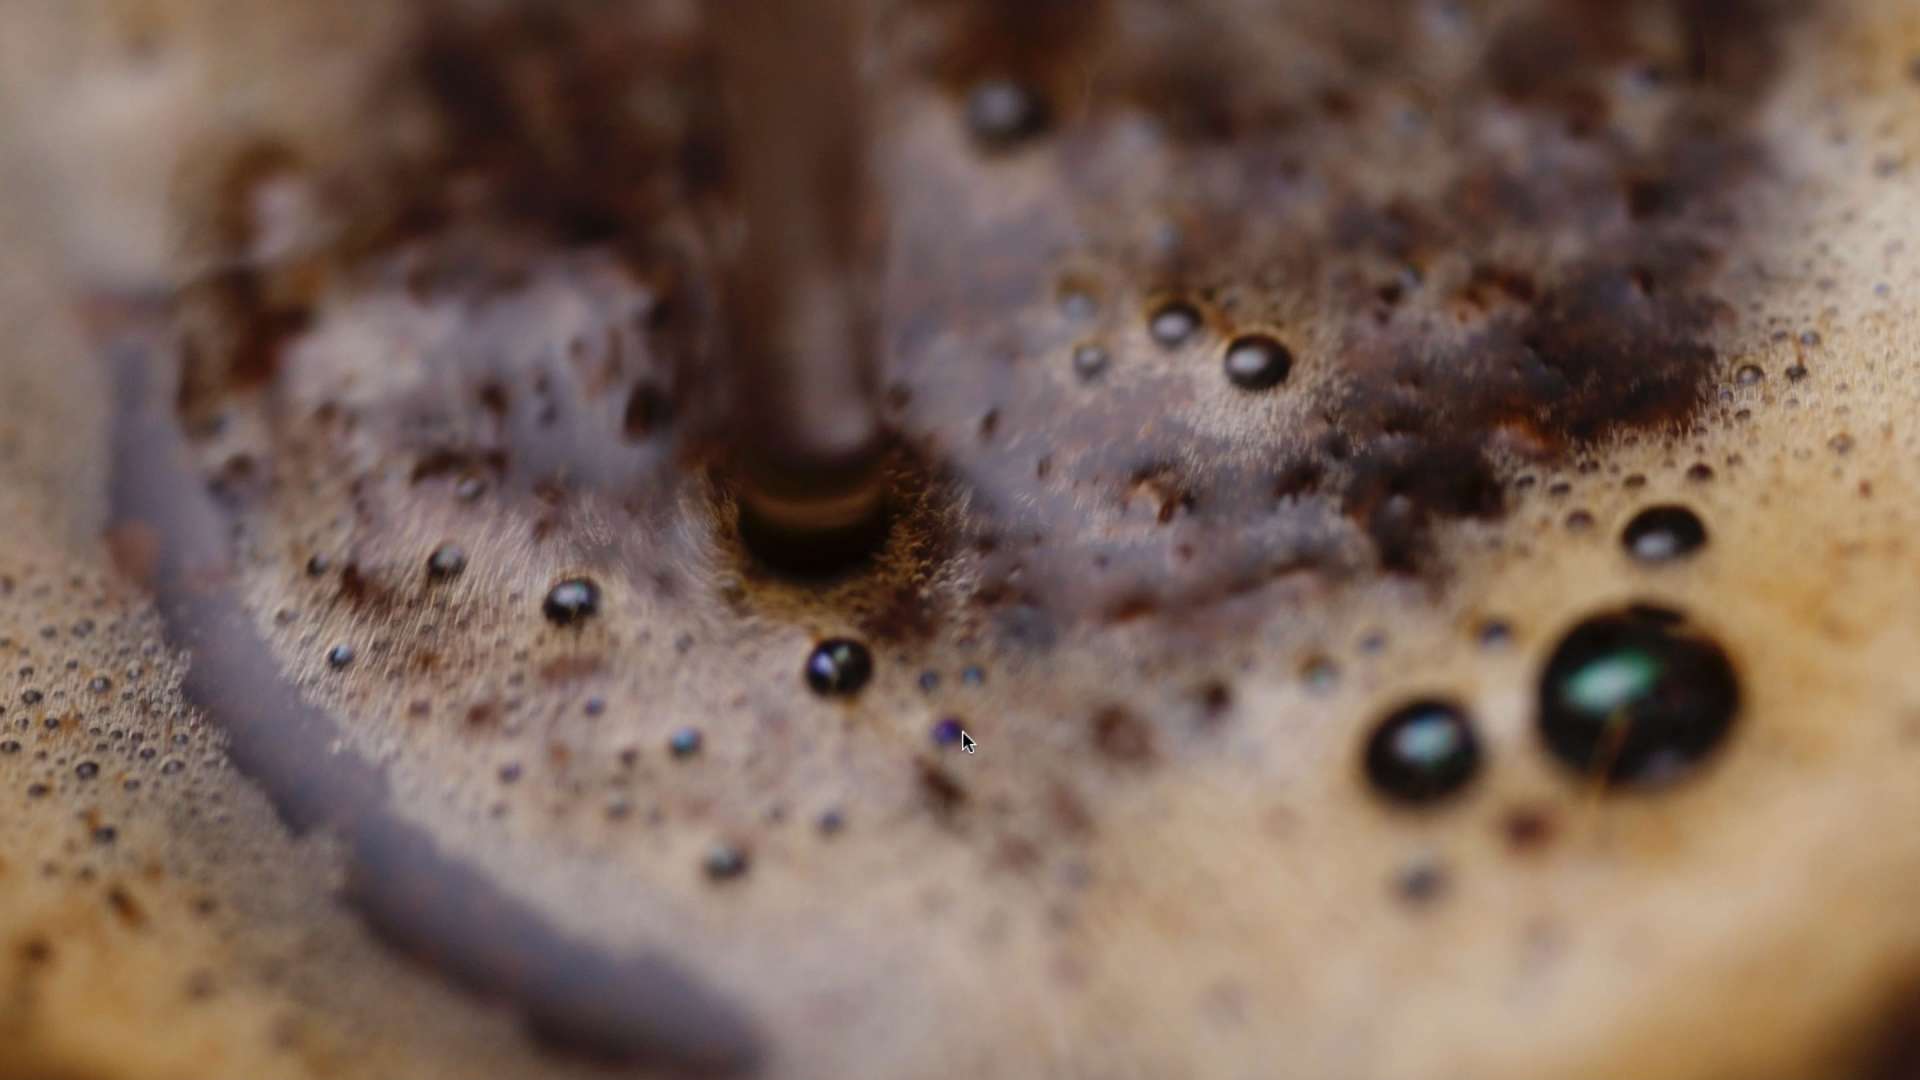 模仿油管PeterLindgren拍摄手冲咖啡